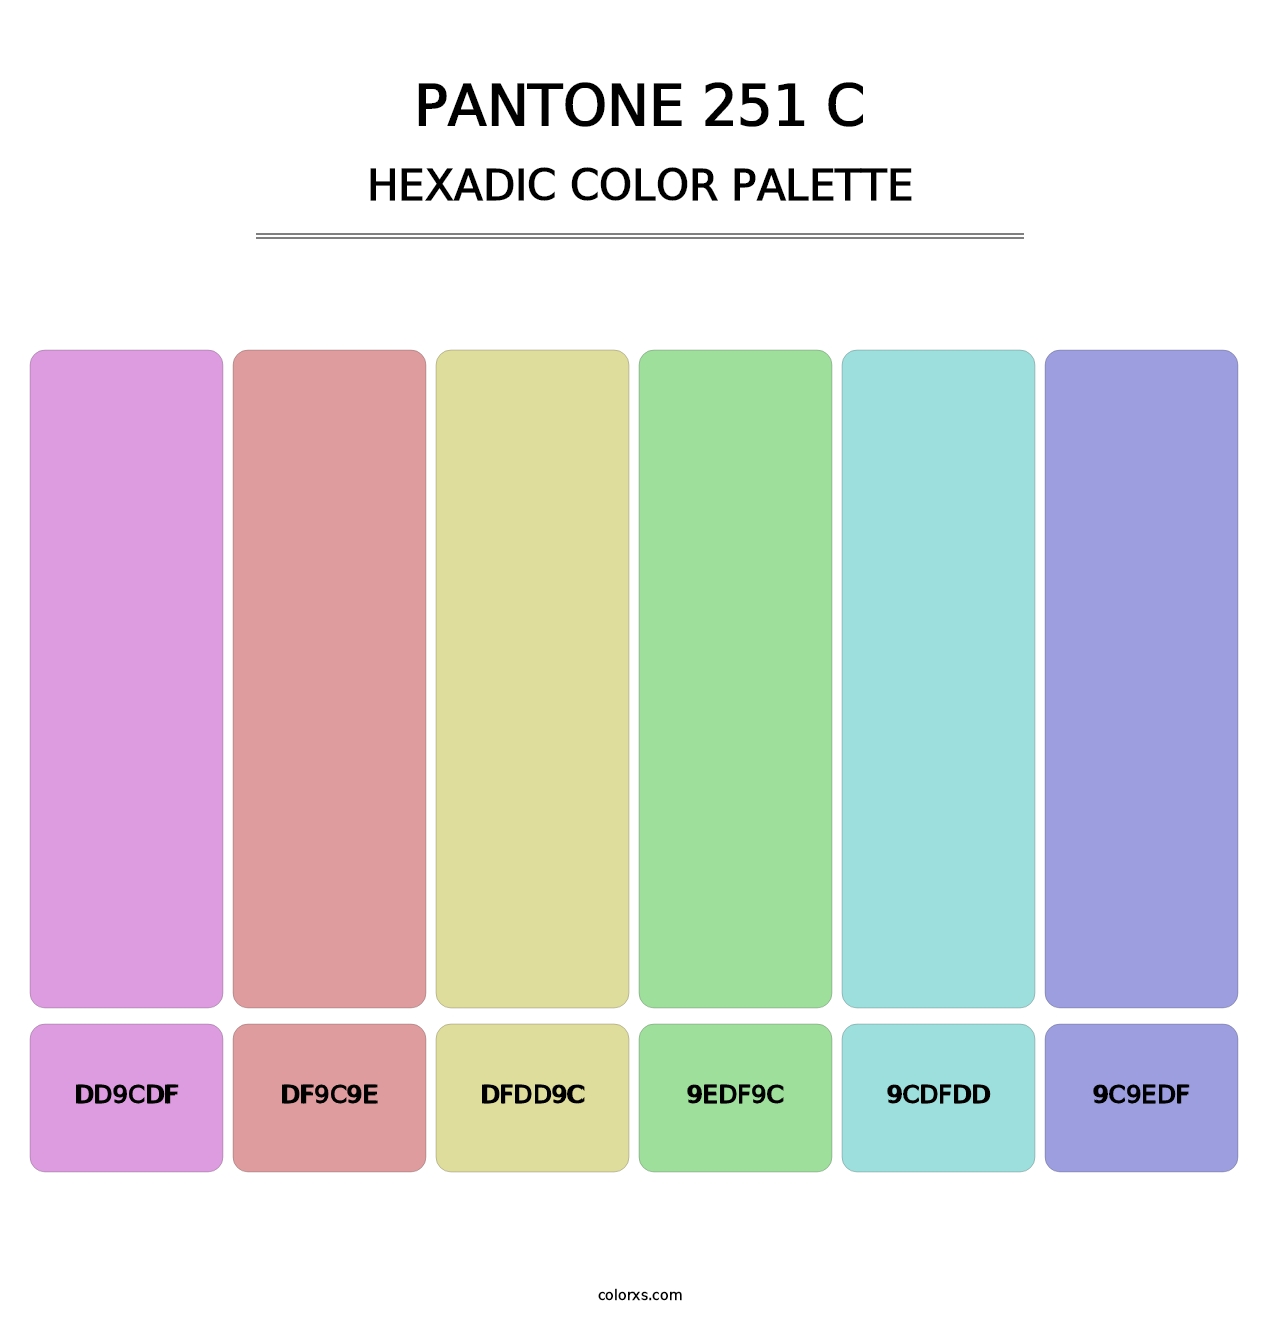 PANTONE 251 C - Hexadic Color Palette